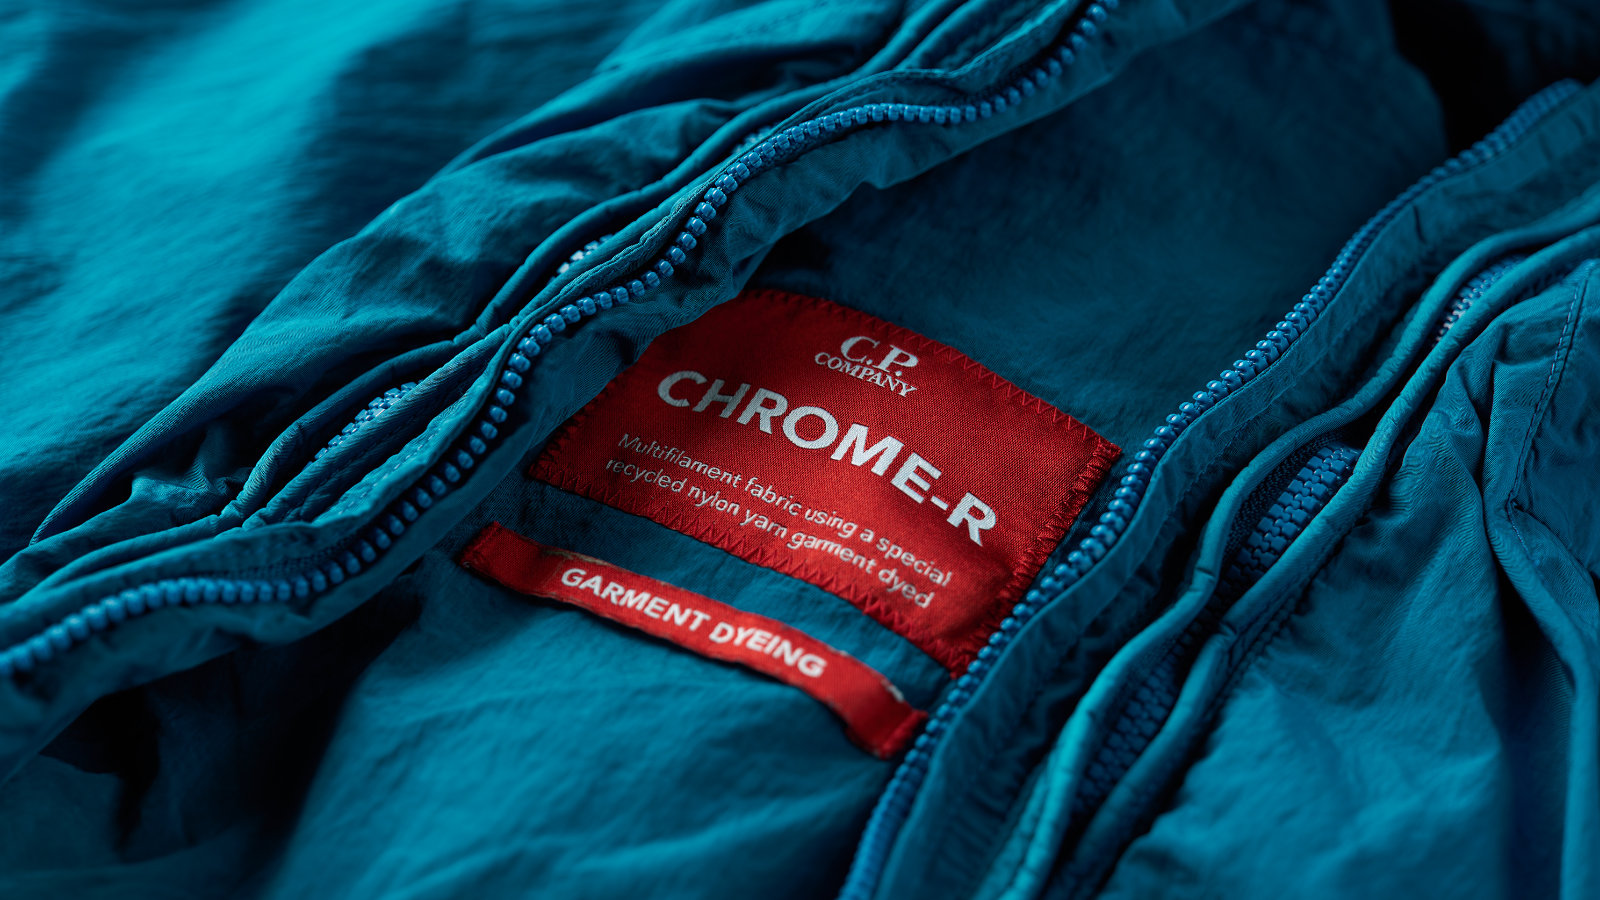 C.P. Company Chrome-R garment-dyed jacket - Grey